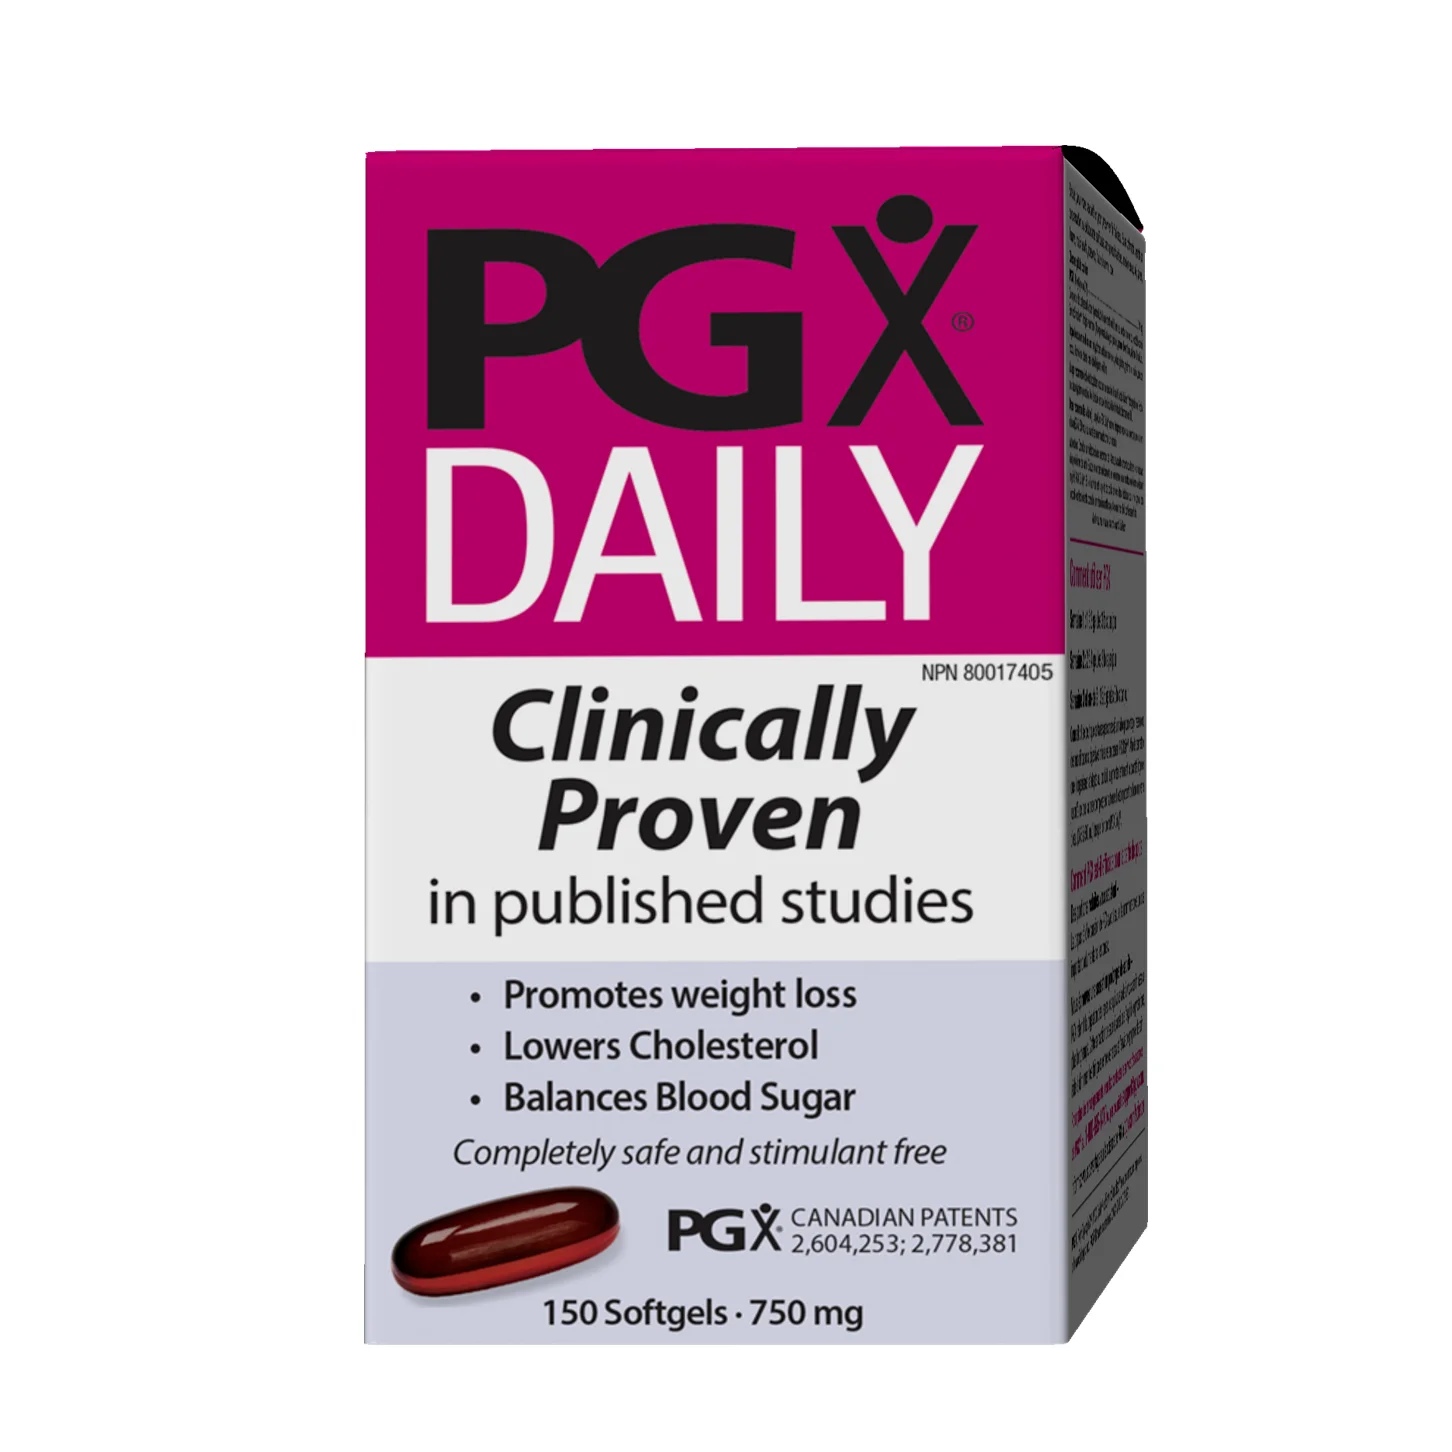 Webber Naturals PGX® Daily Ultra Matrix Slimming 750 mg x 150 softgel capsules